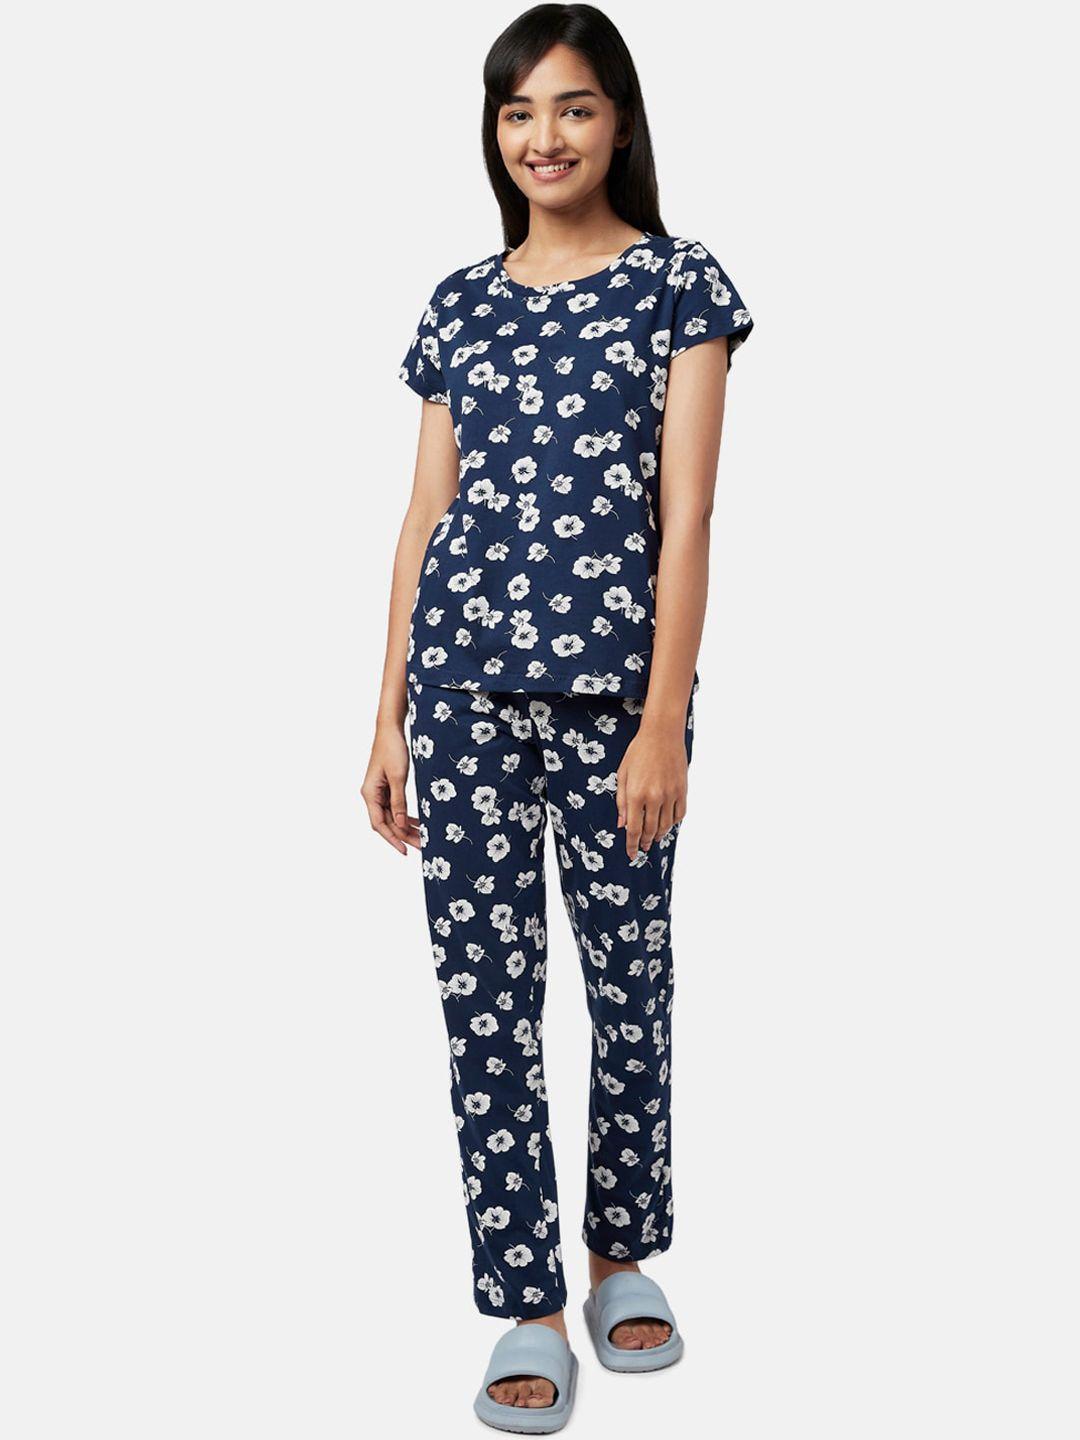 yu by pantaloons women navy blue & white printed night suit